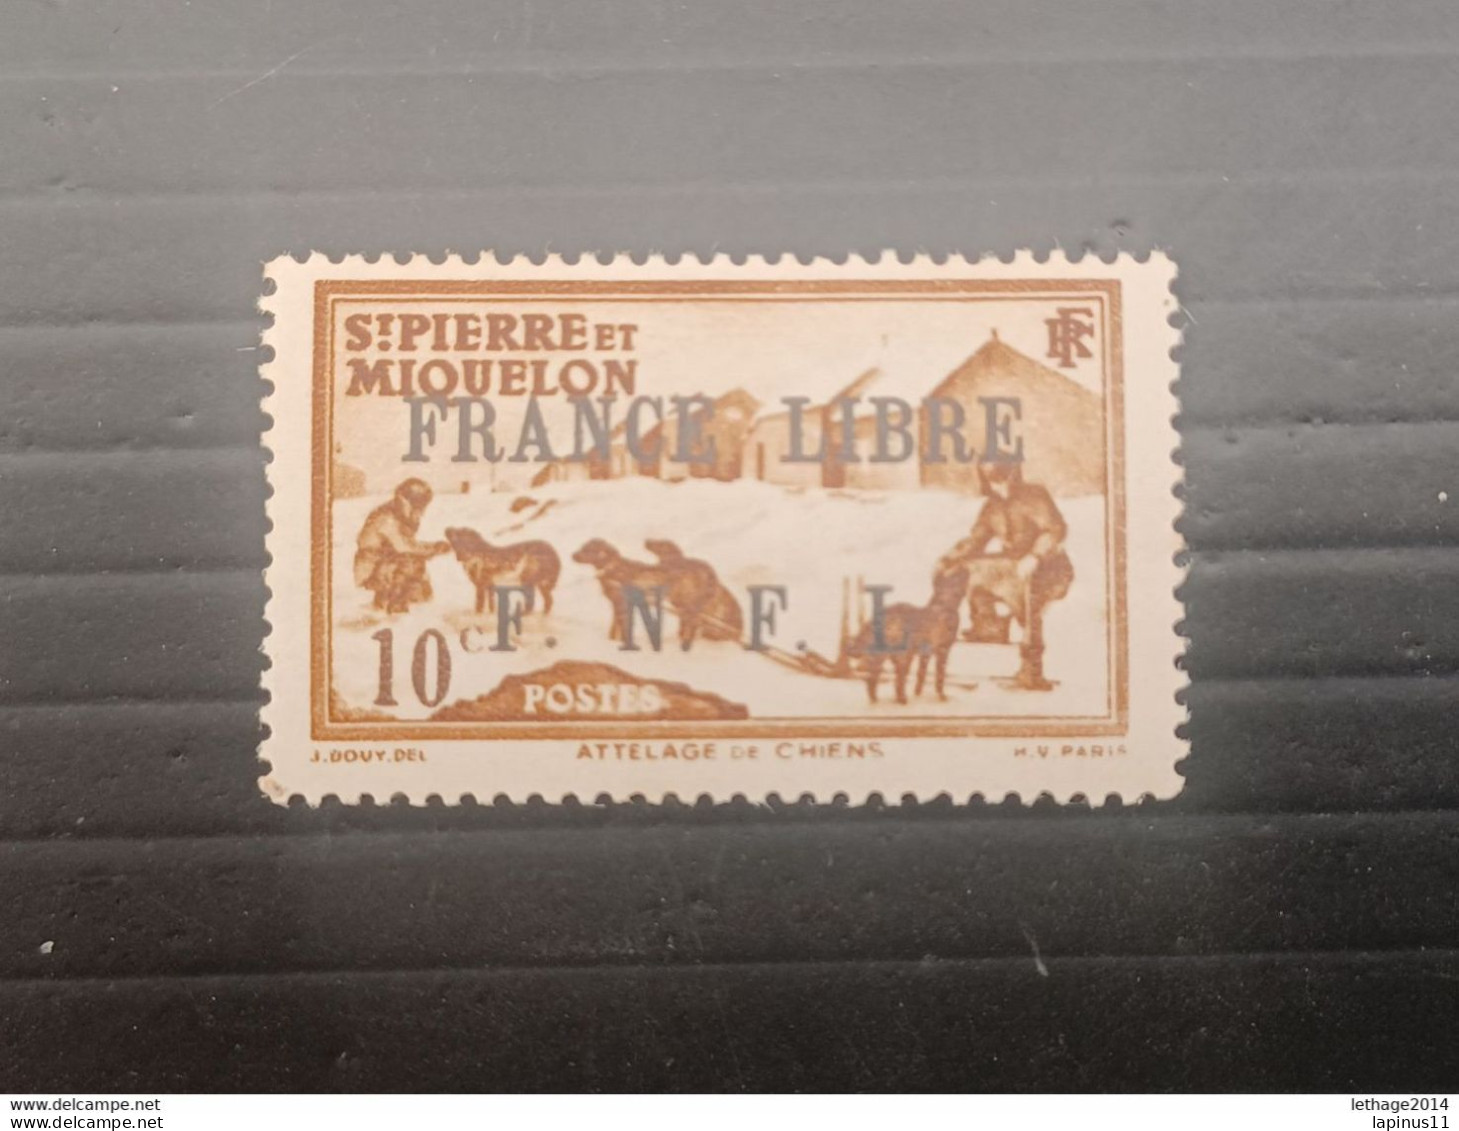 ST PIERRE ET MIQUELLON 1941 STAMPS OF 1922 OVERPRINT FRANCE LIBRE F N F L CAT. YVERT N. 250 MNH - Unused Stamps